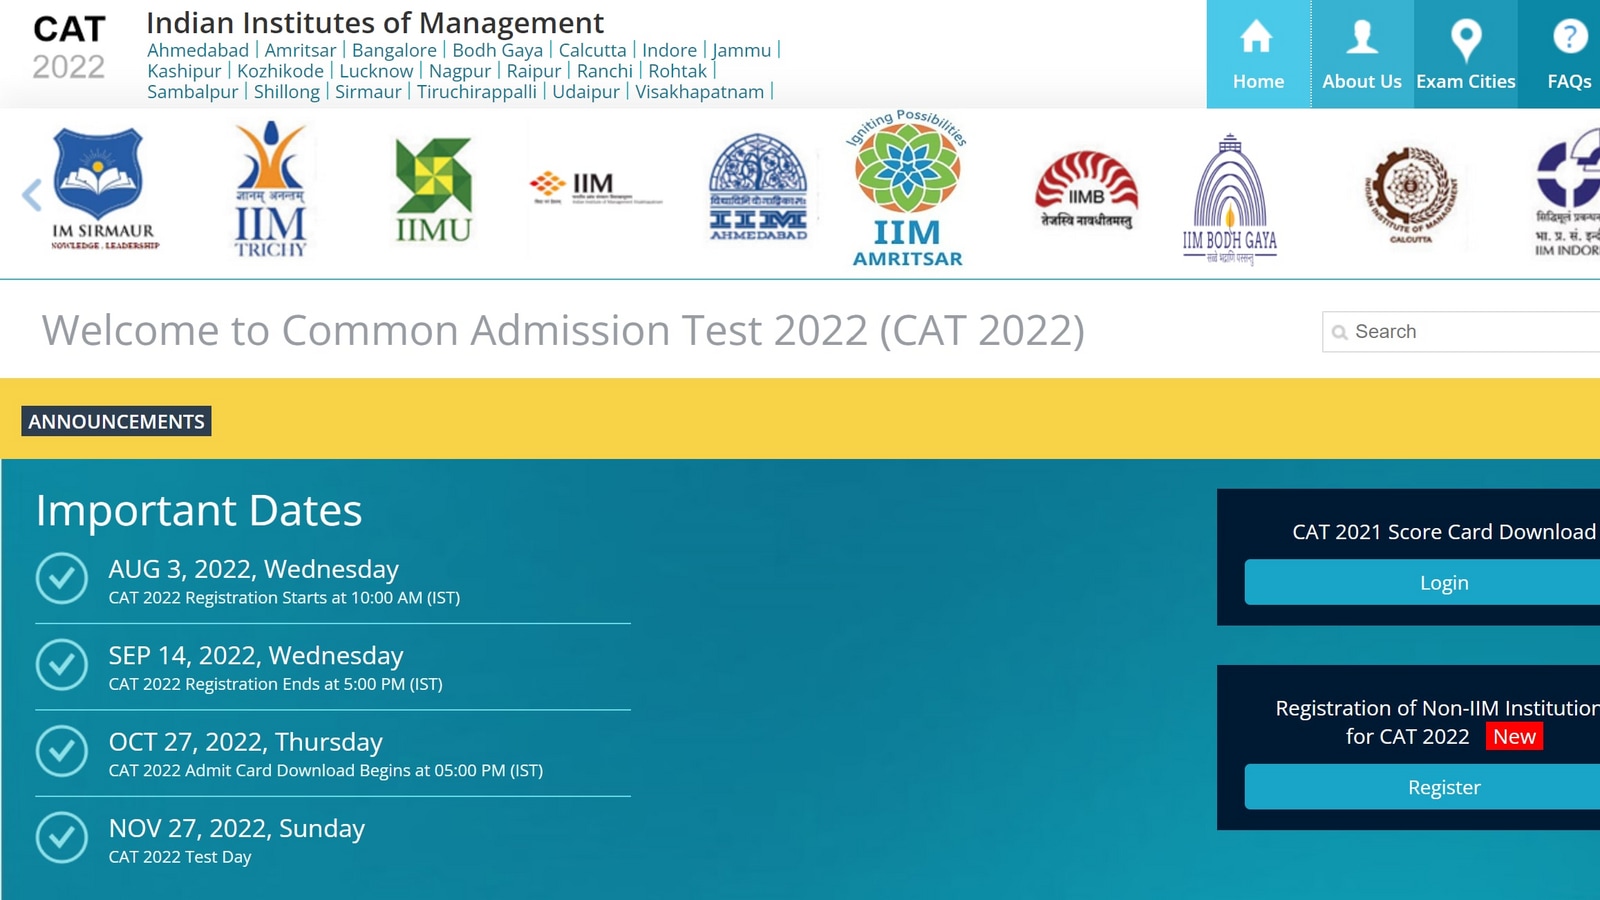 Top CAT Exam Coaching, Best MBA Entrance Preparation in Kolkata